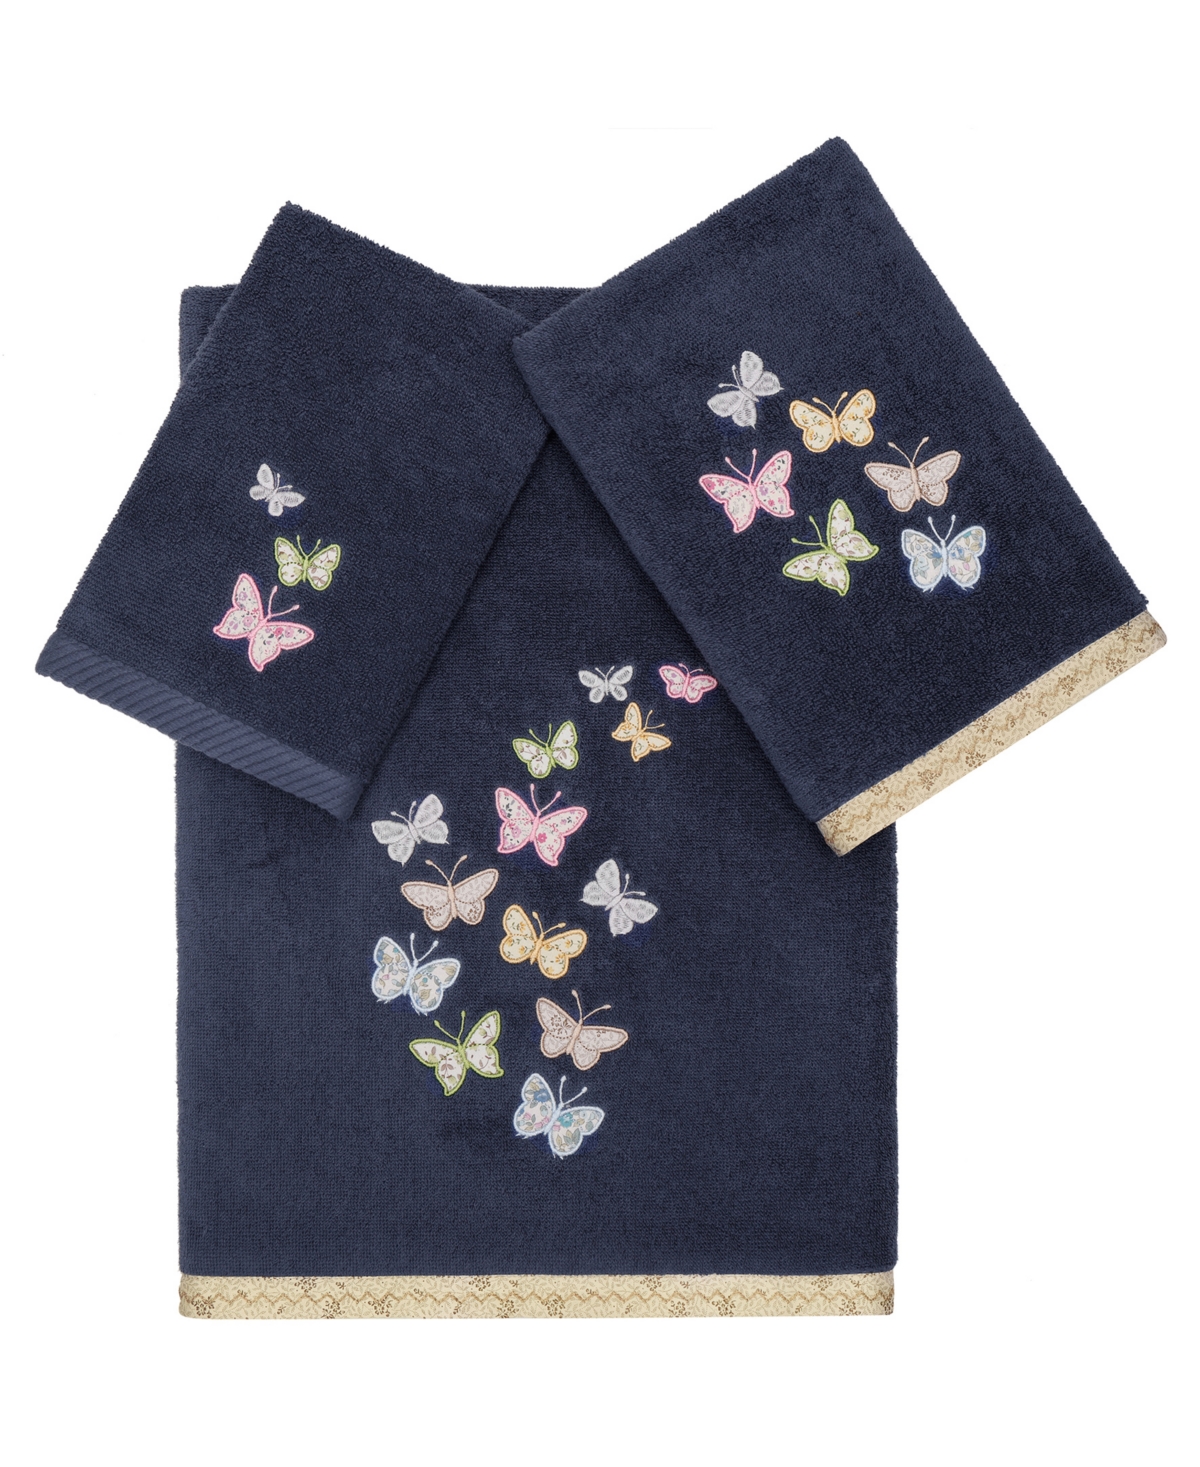 Linum Home Textiles Turkish Cotton Mariposa Embellished Towel Set, 3 Piece In Marine